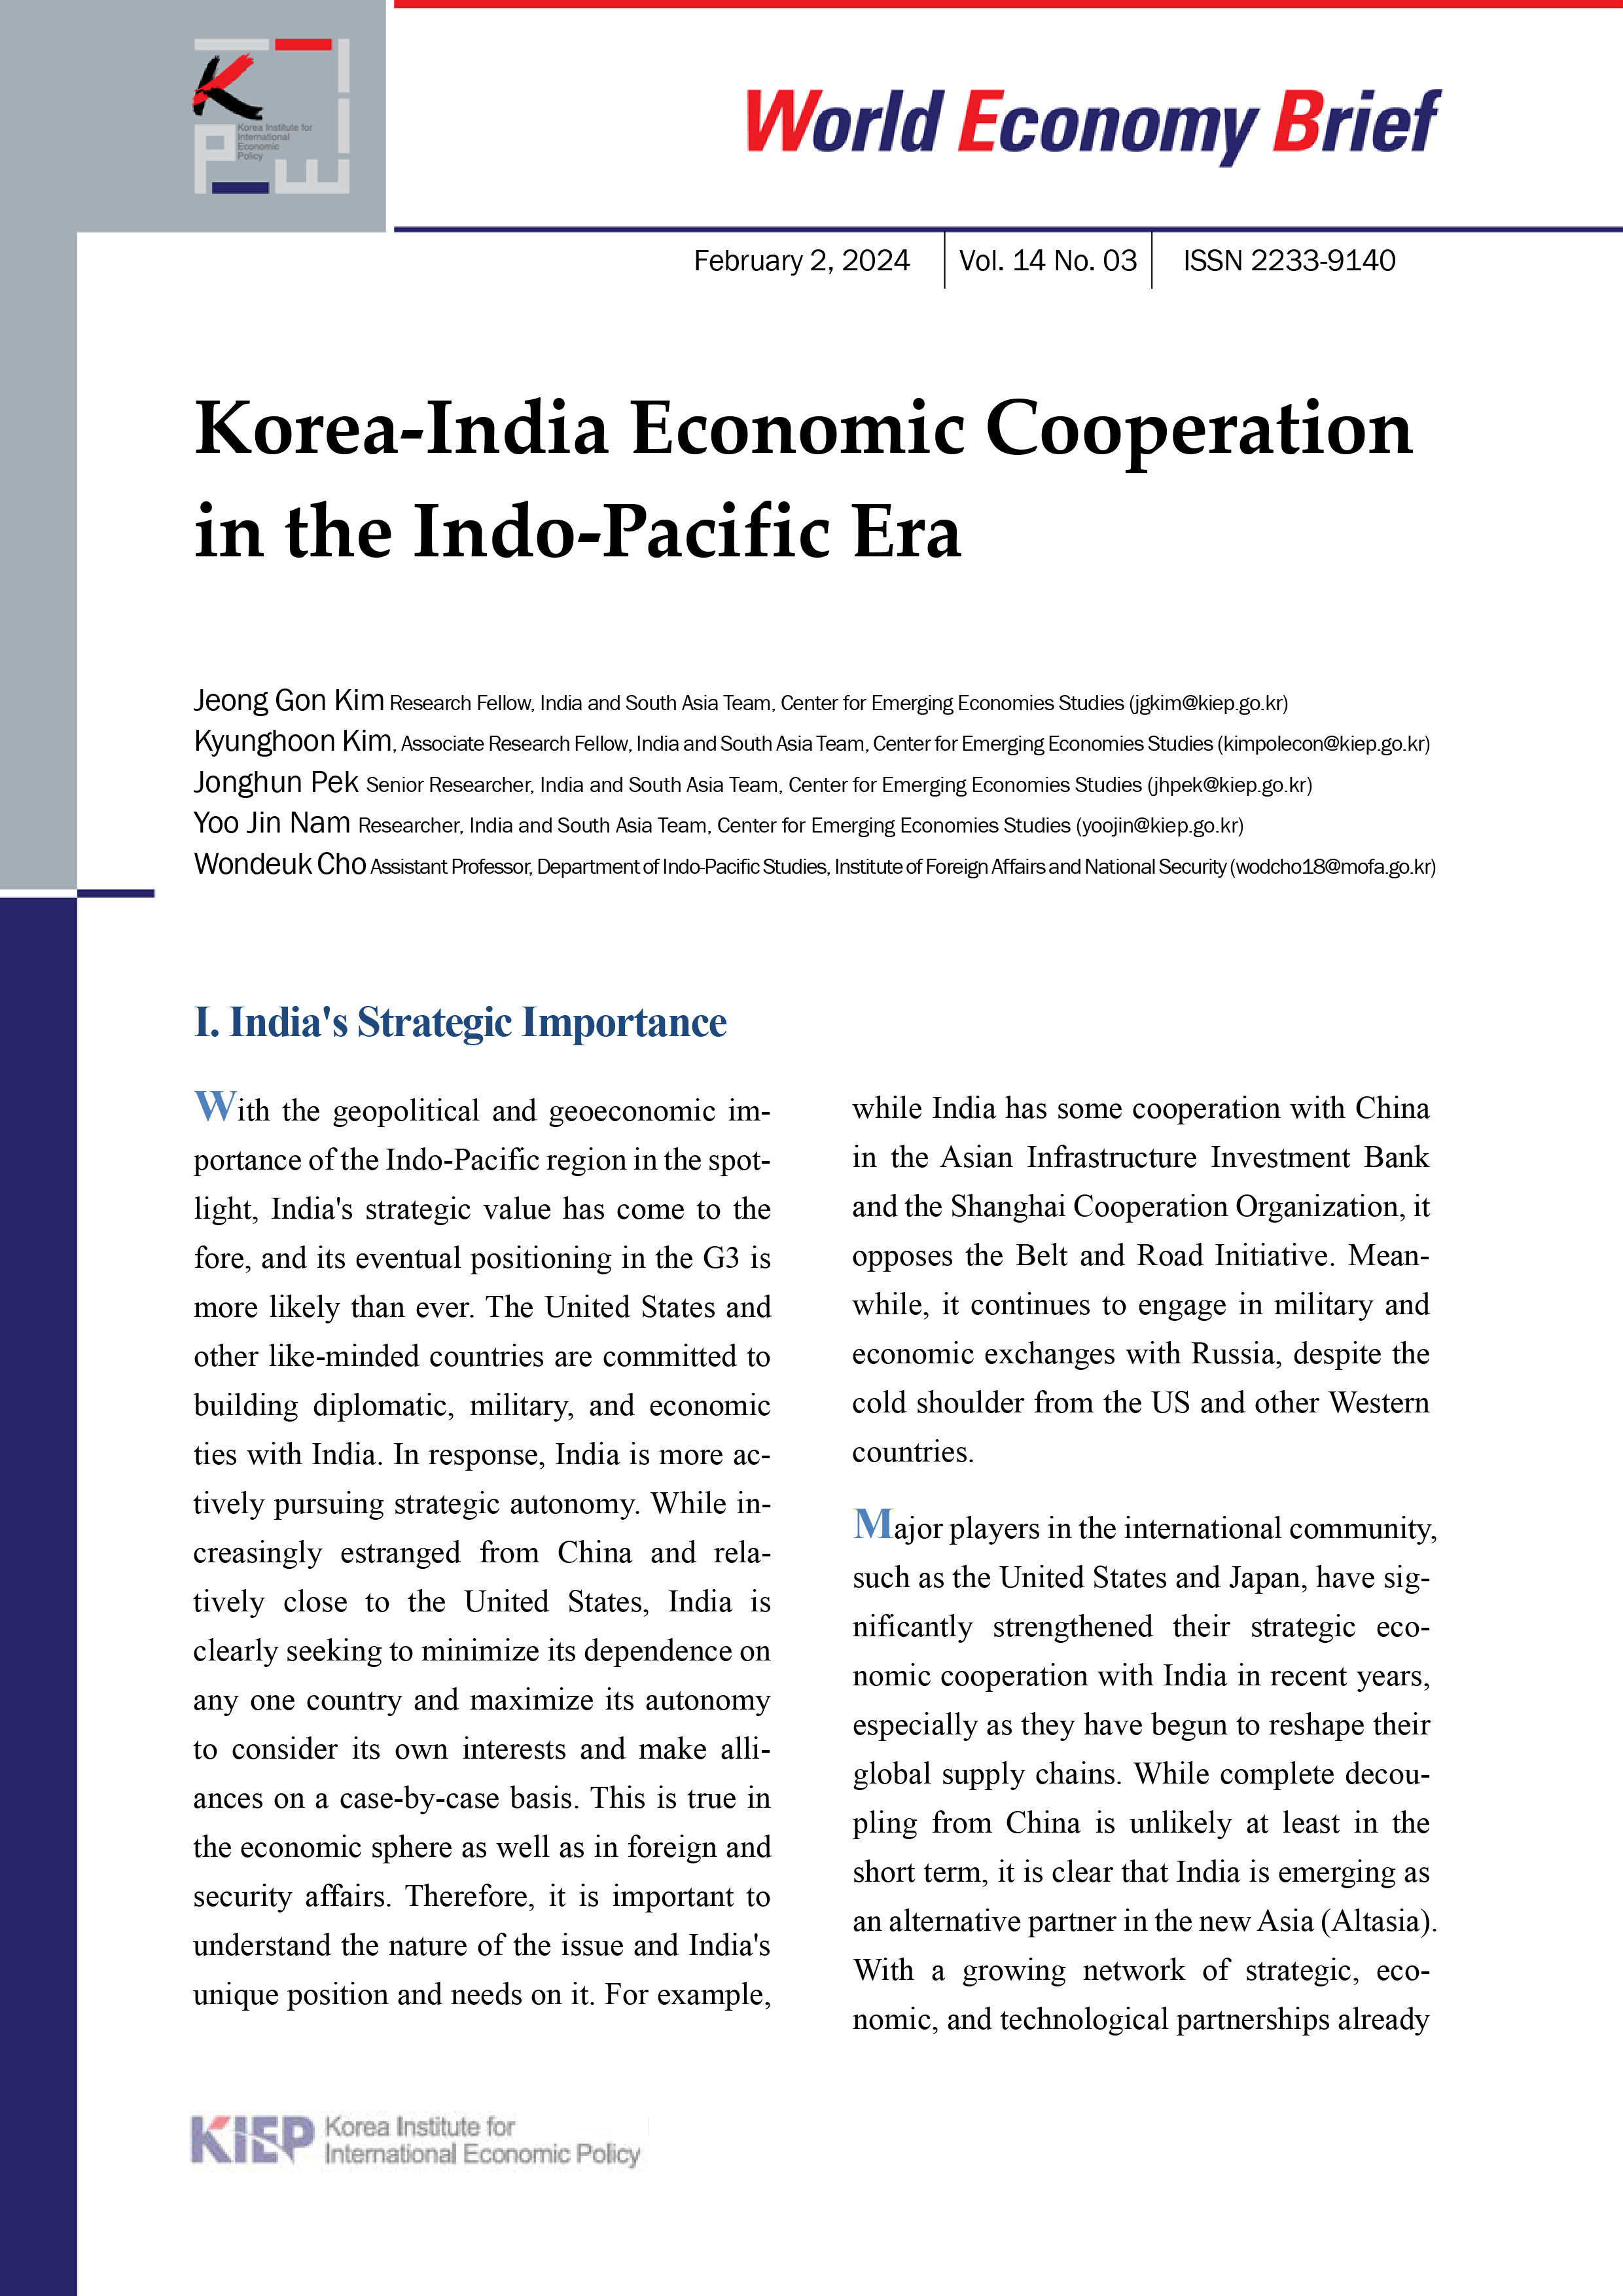 Korea-India Economic Cooperation in the Indo-Pacific Era